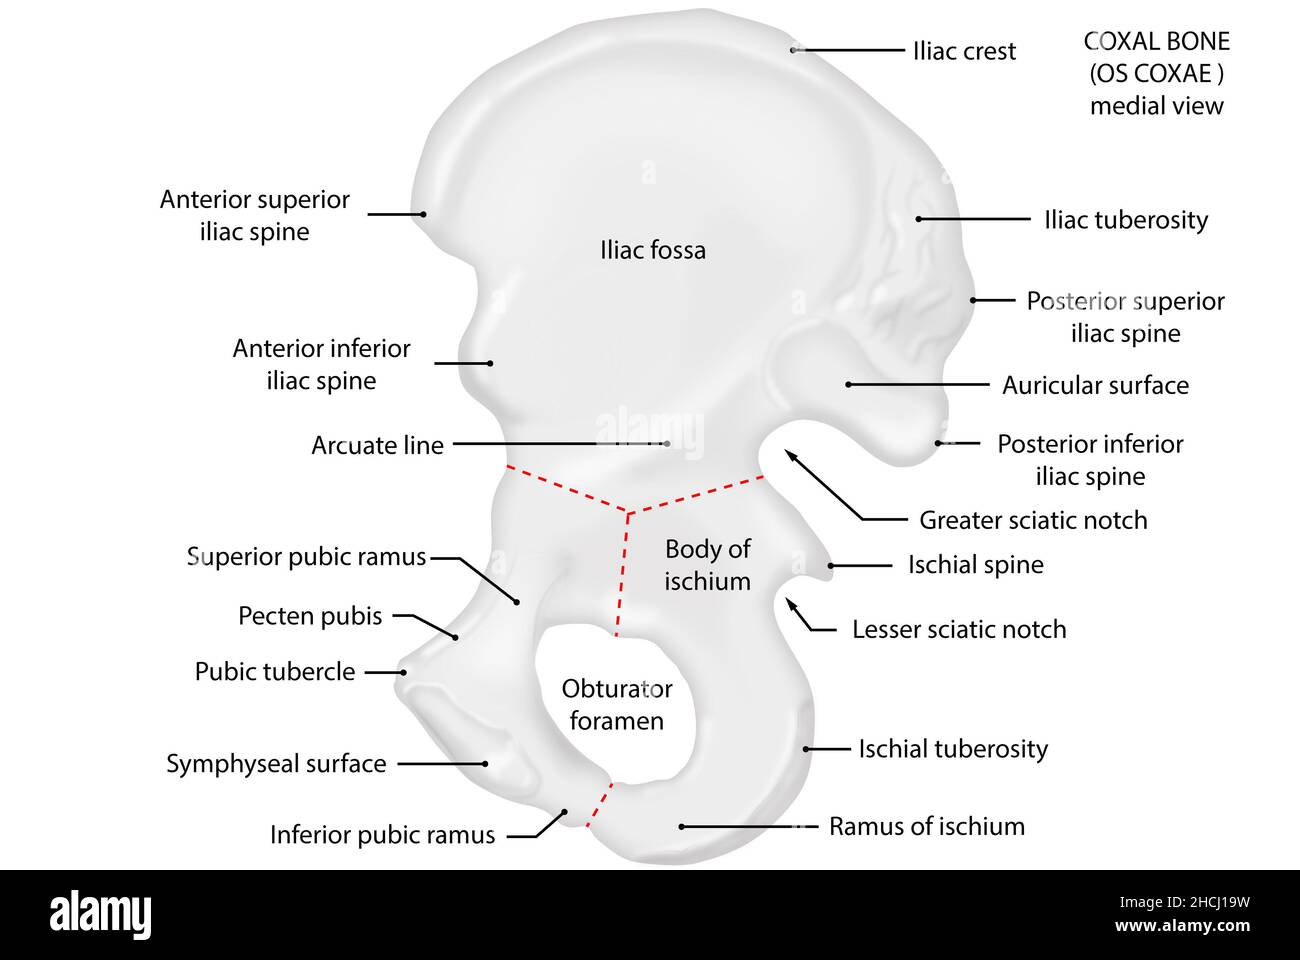 OS coxae, Coxalknochen, mediale Ansicht, Anatomie Stockfoto